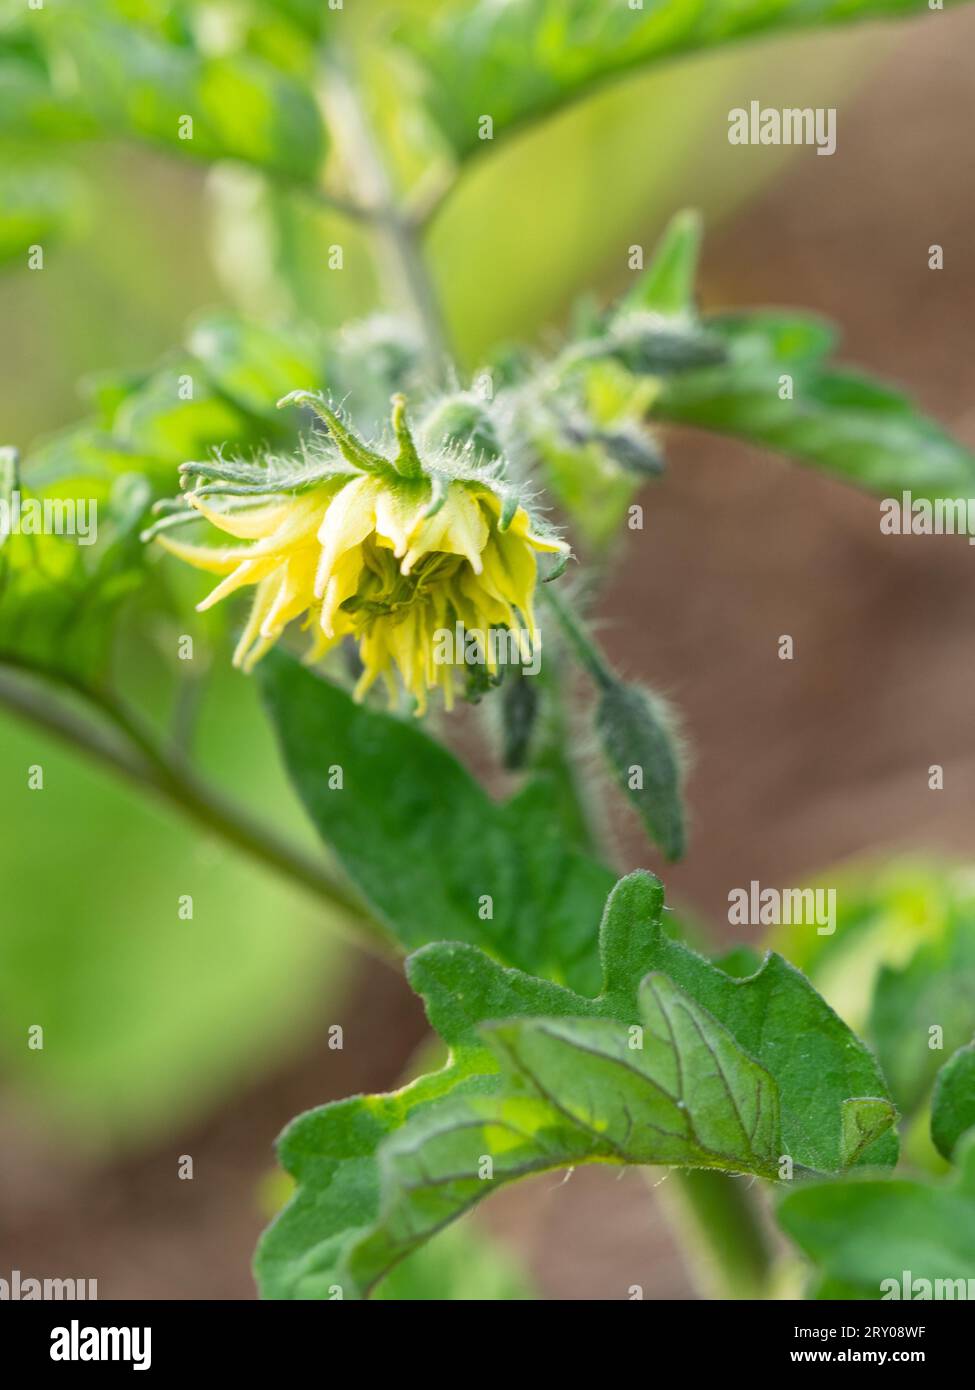 Beautiful yellow Tomato plant flower illuminated by the sunlight, hairy green stem Stock Photo